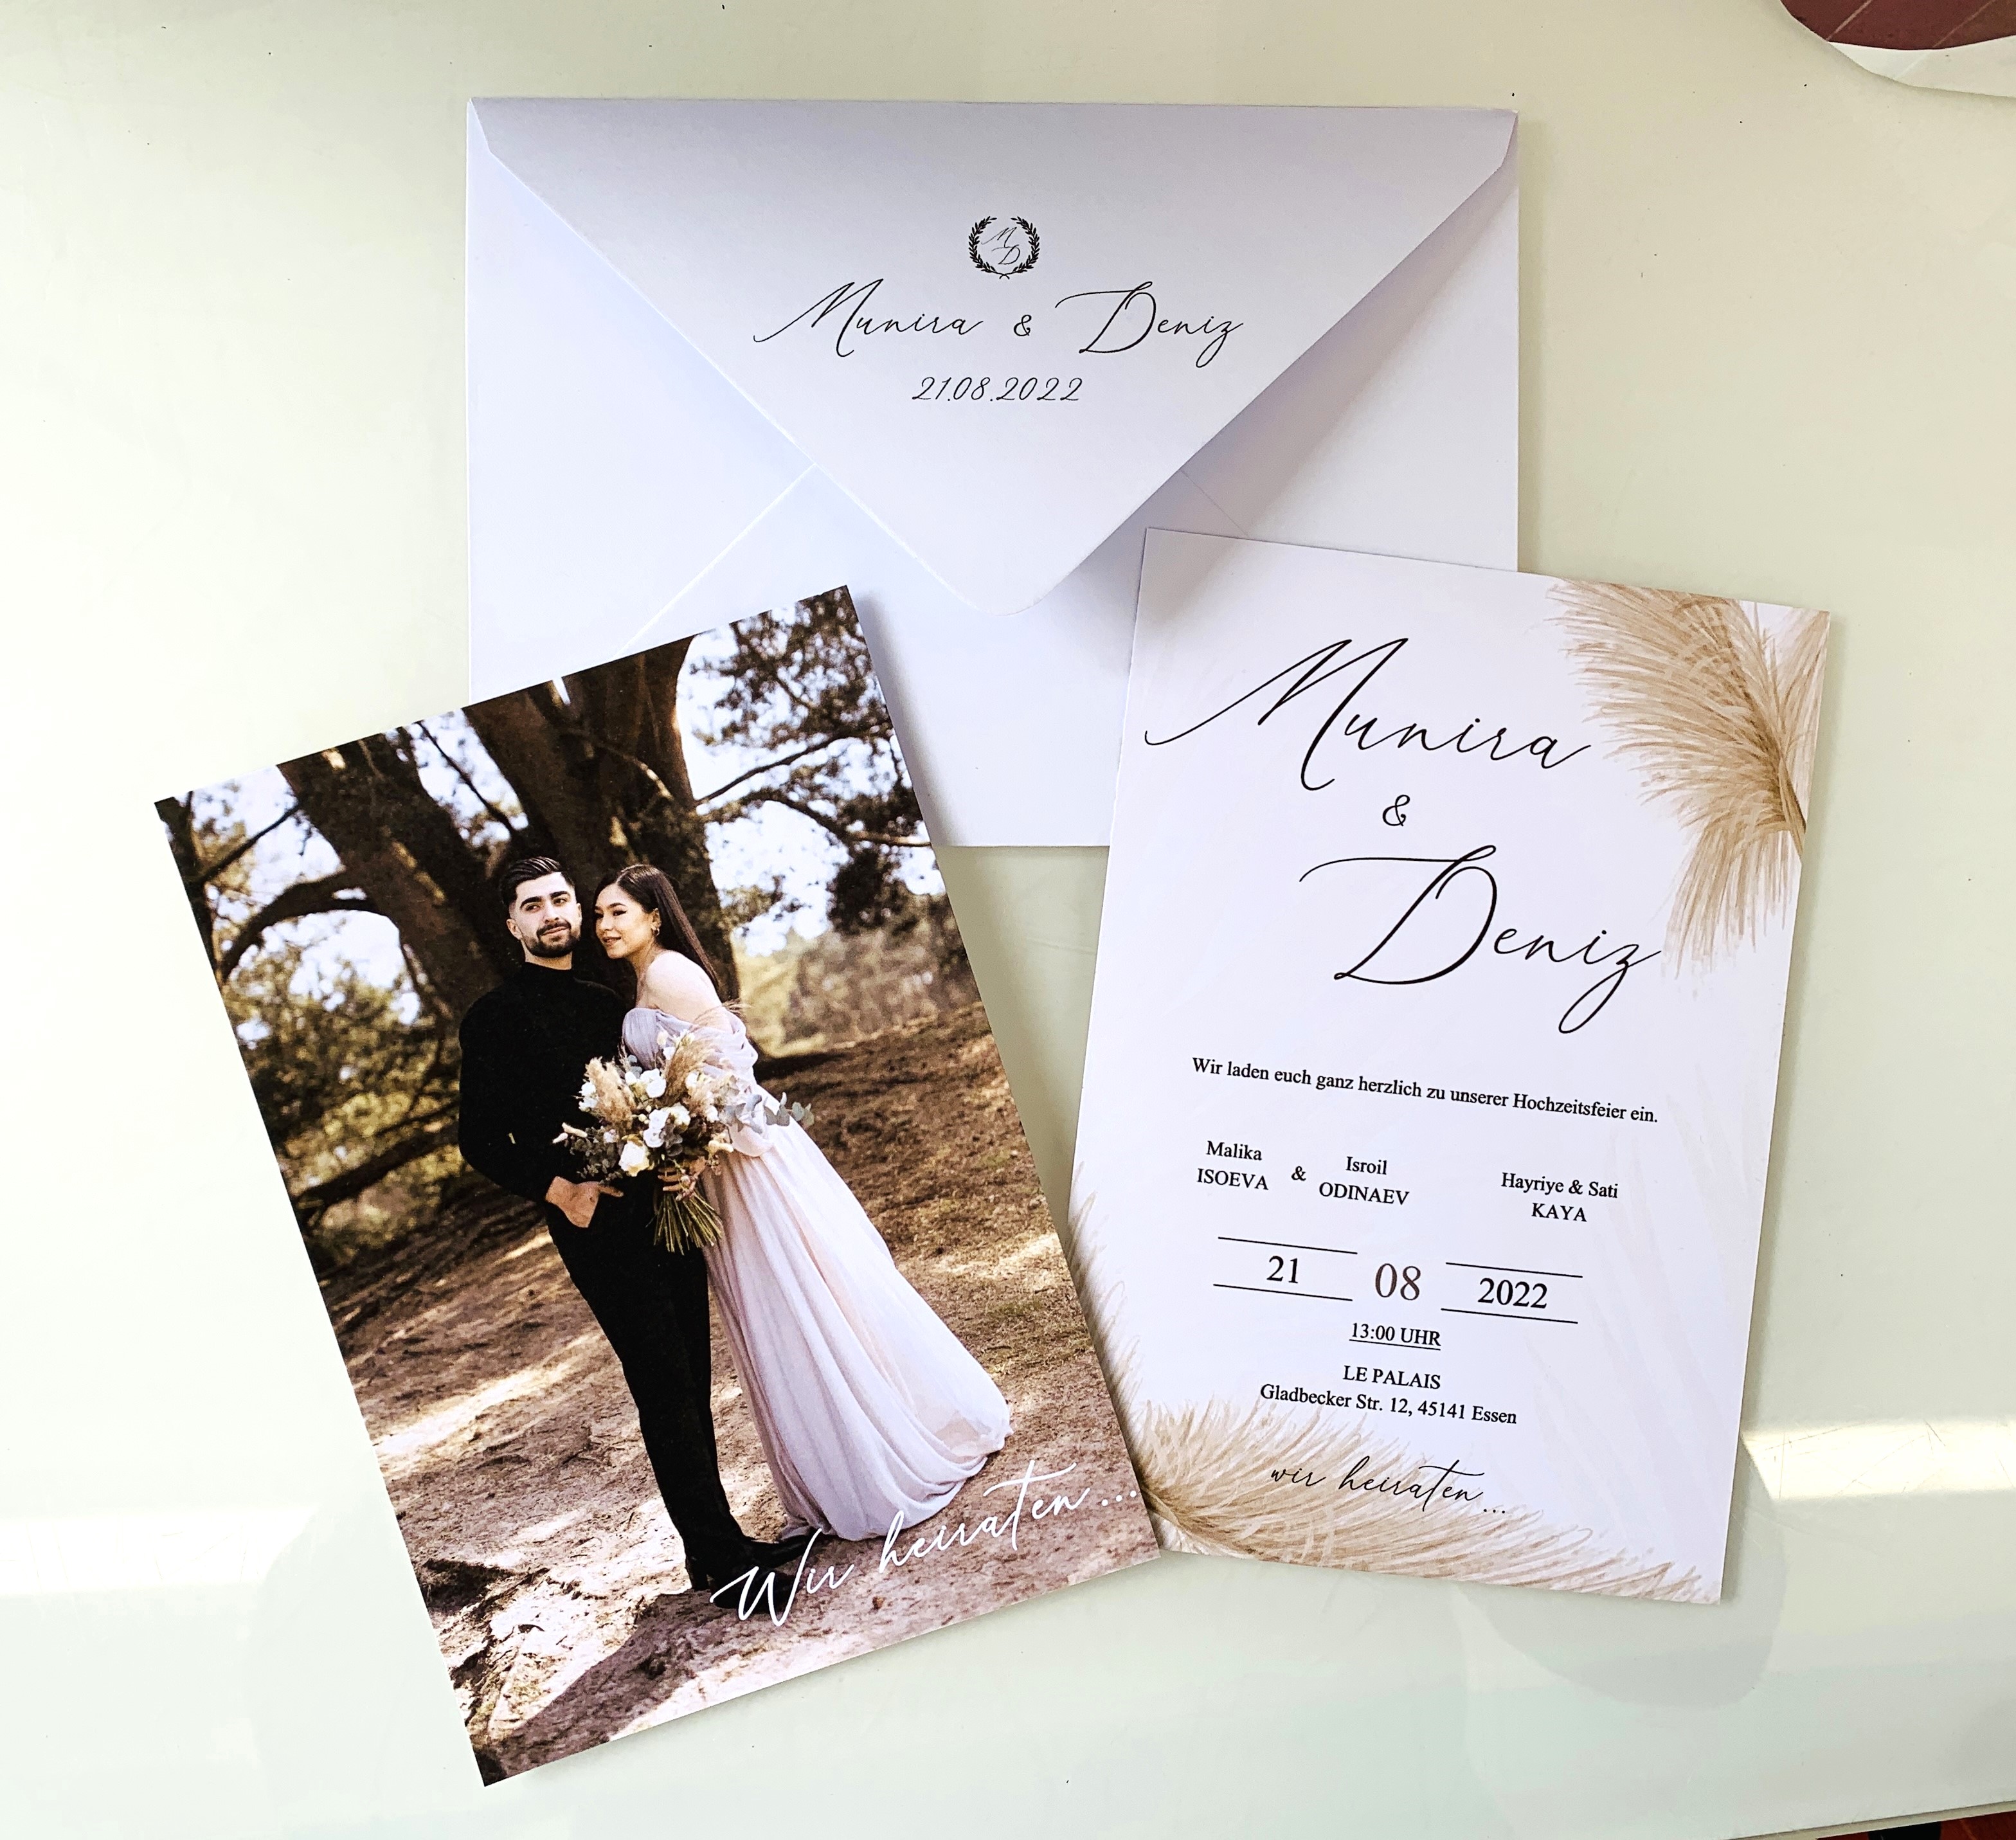 PD202 Einladungskarte mit Bild / resimli Davetiye - Hochzeit / Düğün - Verlobung / Nişan 